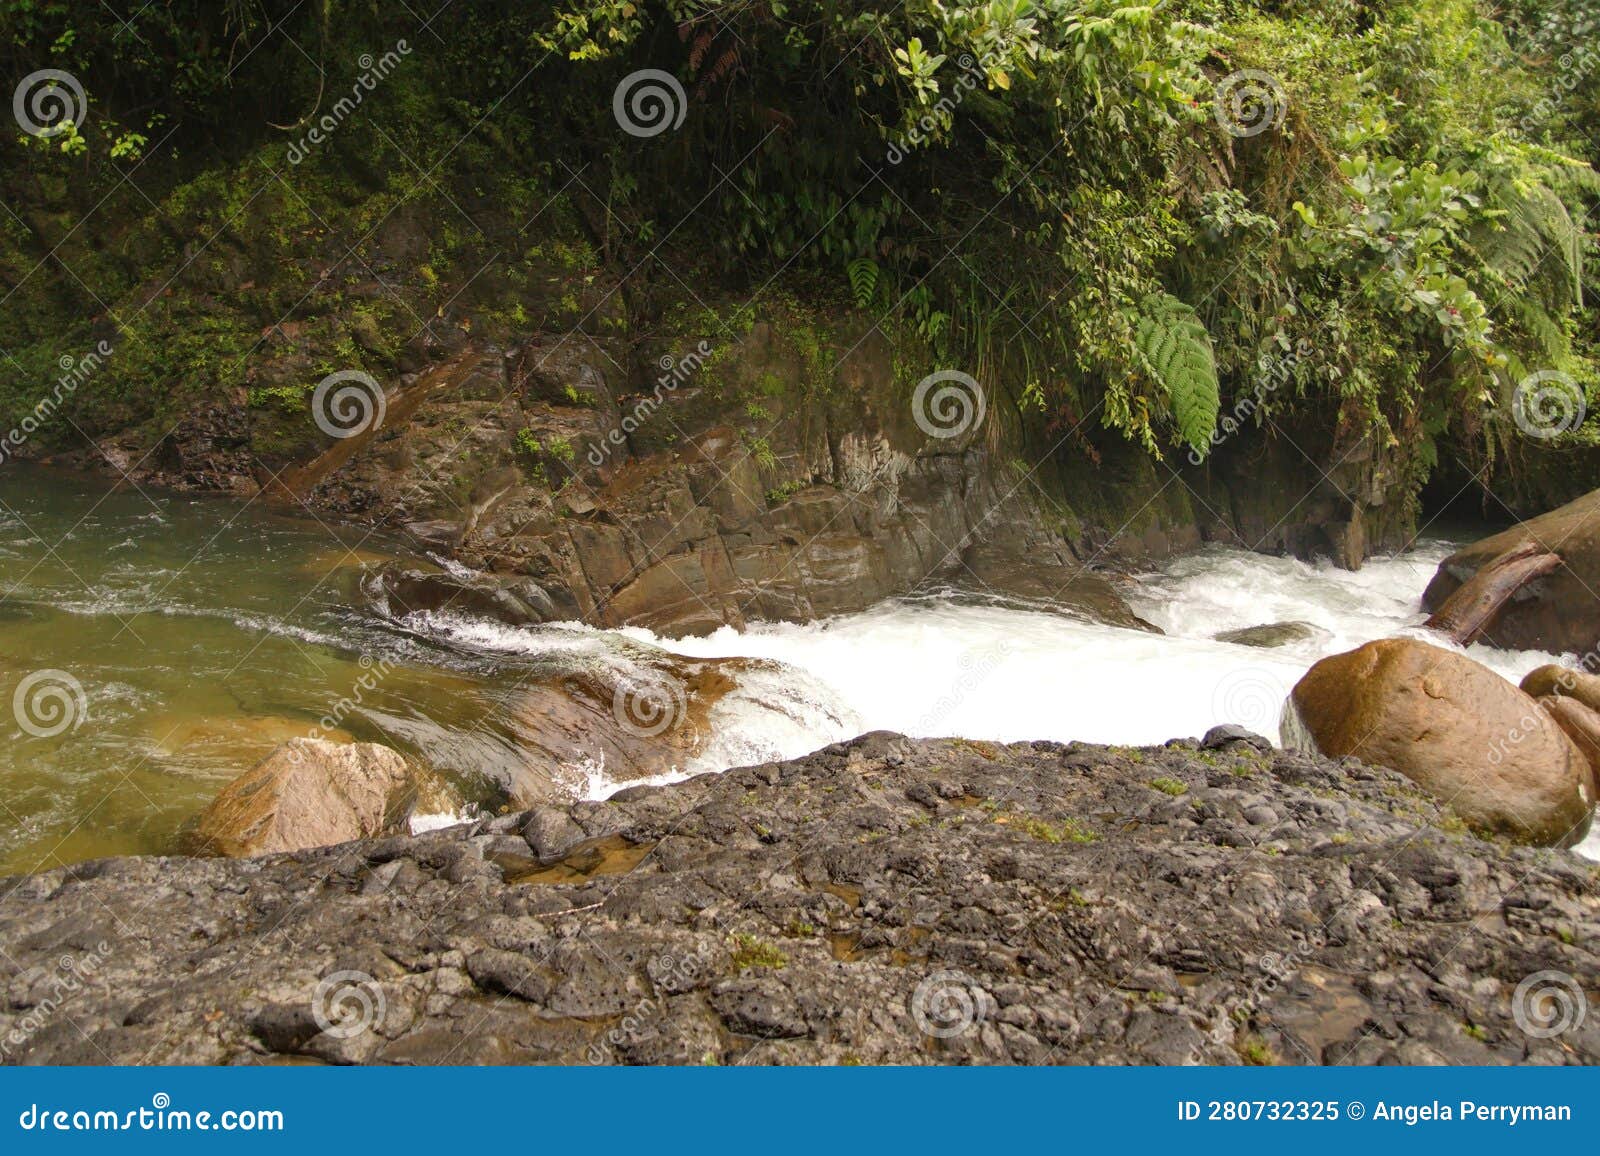 rapids on the hollin river in ecuador